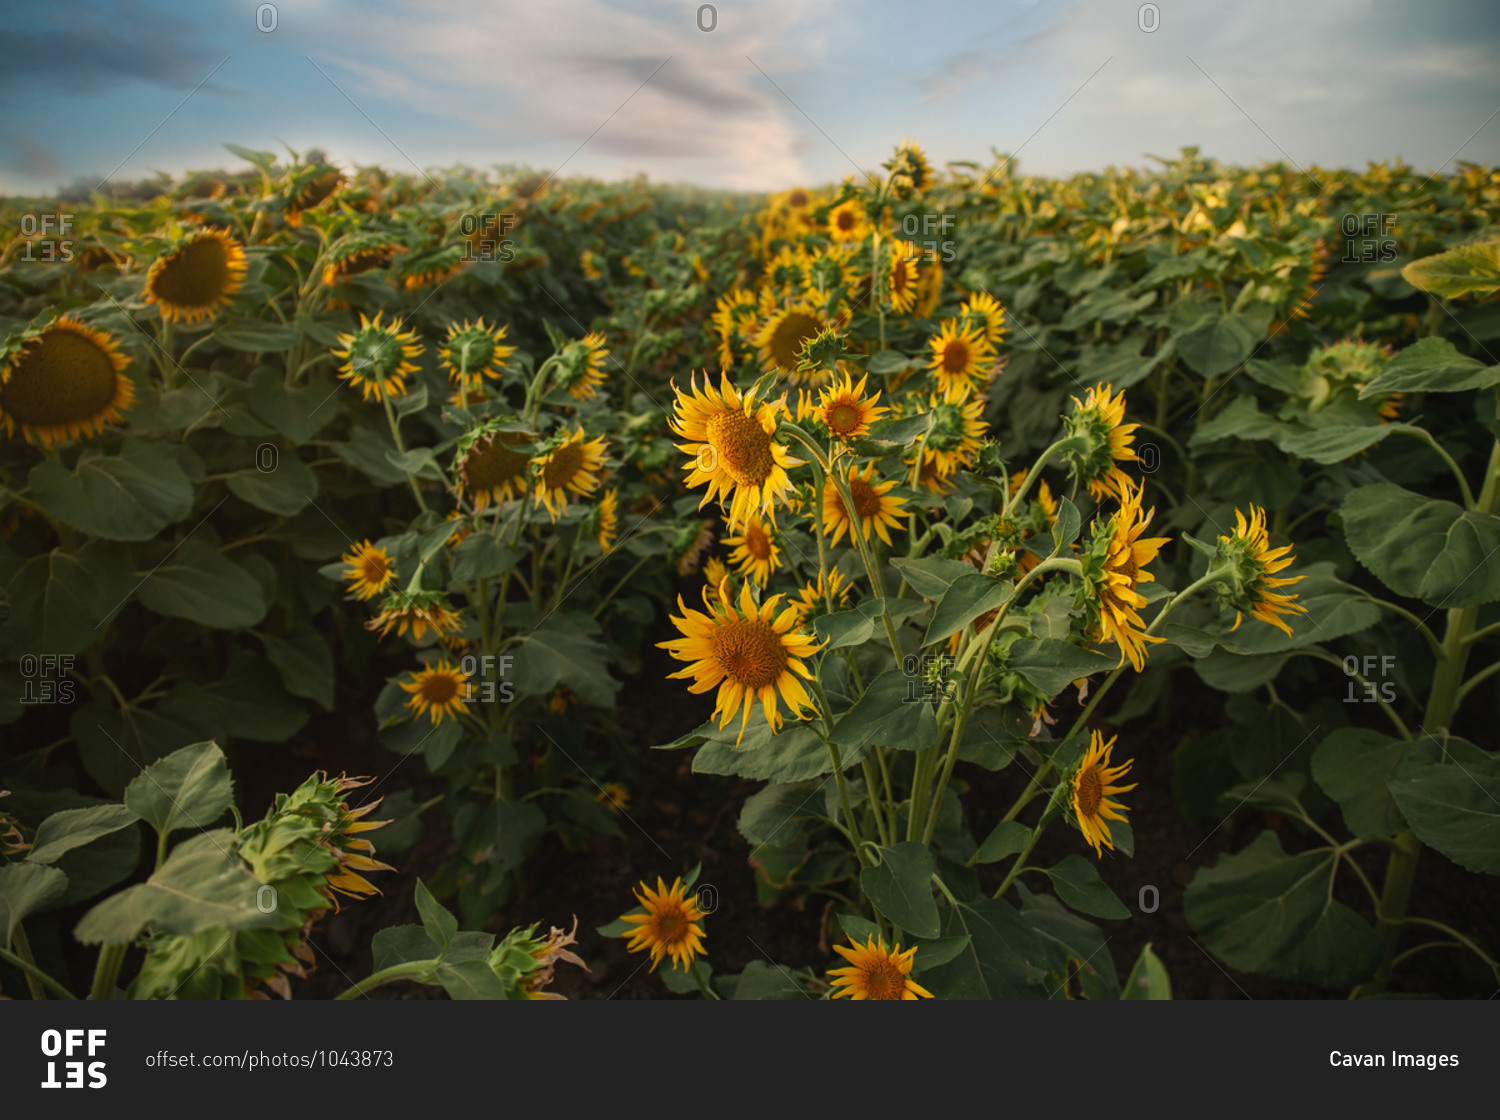 Sunflowers field under cloudy blue skies in summer